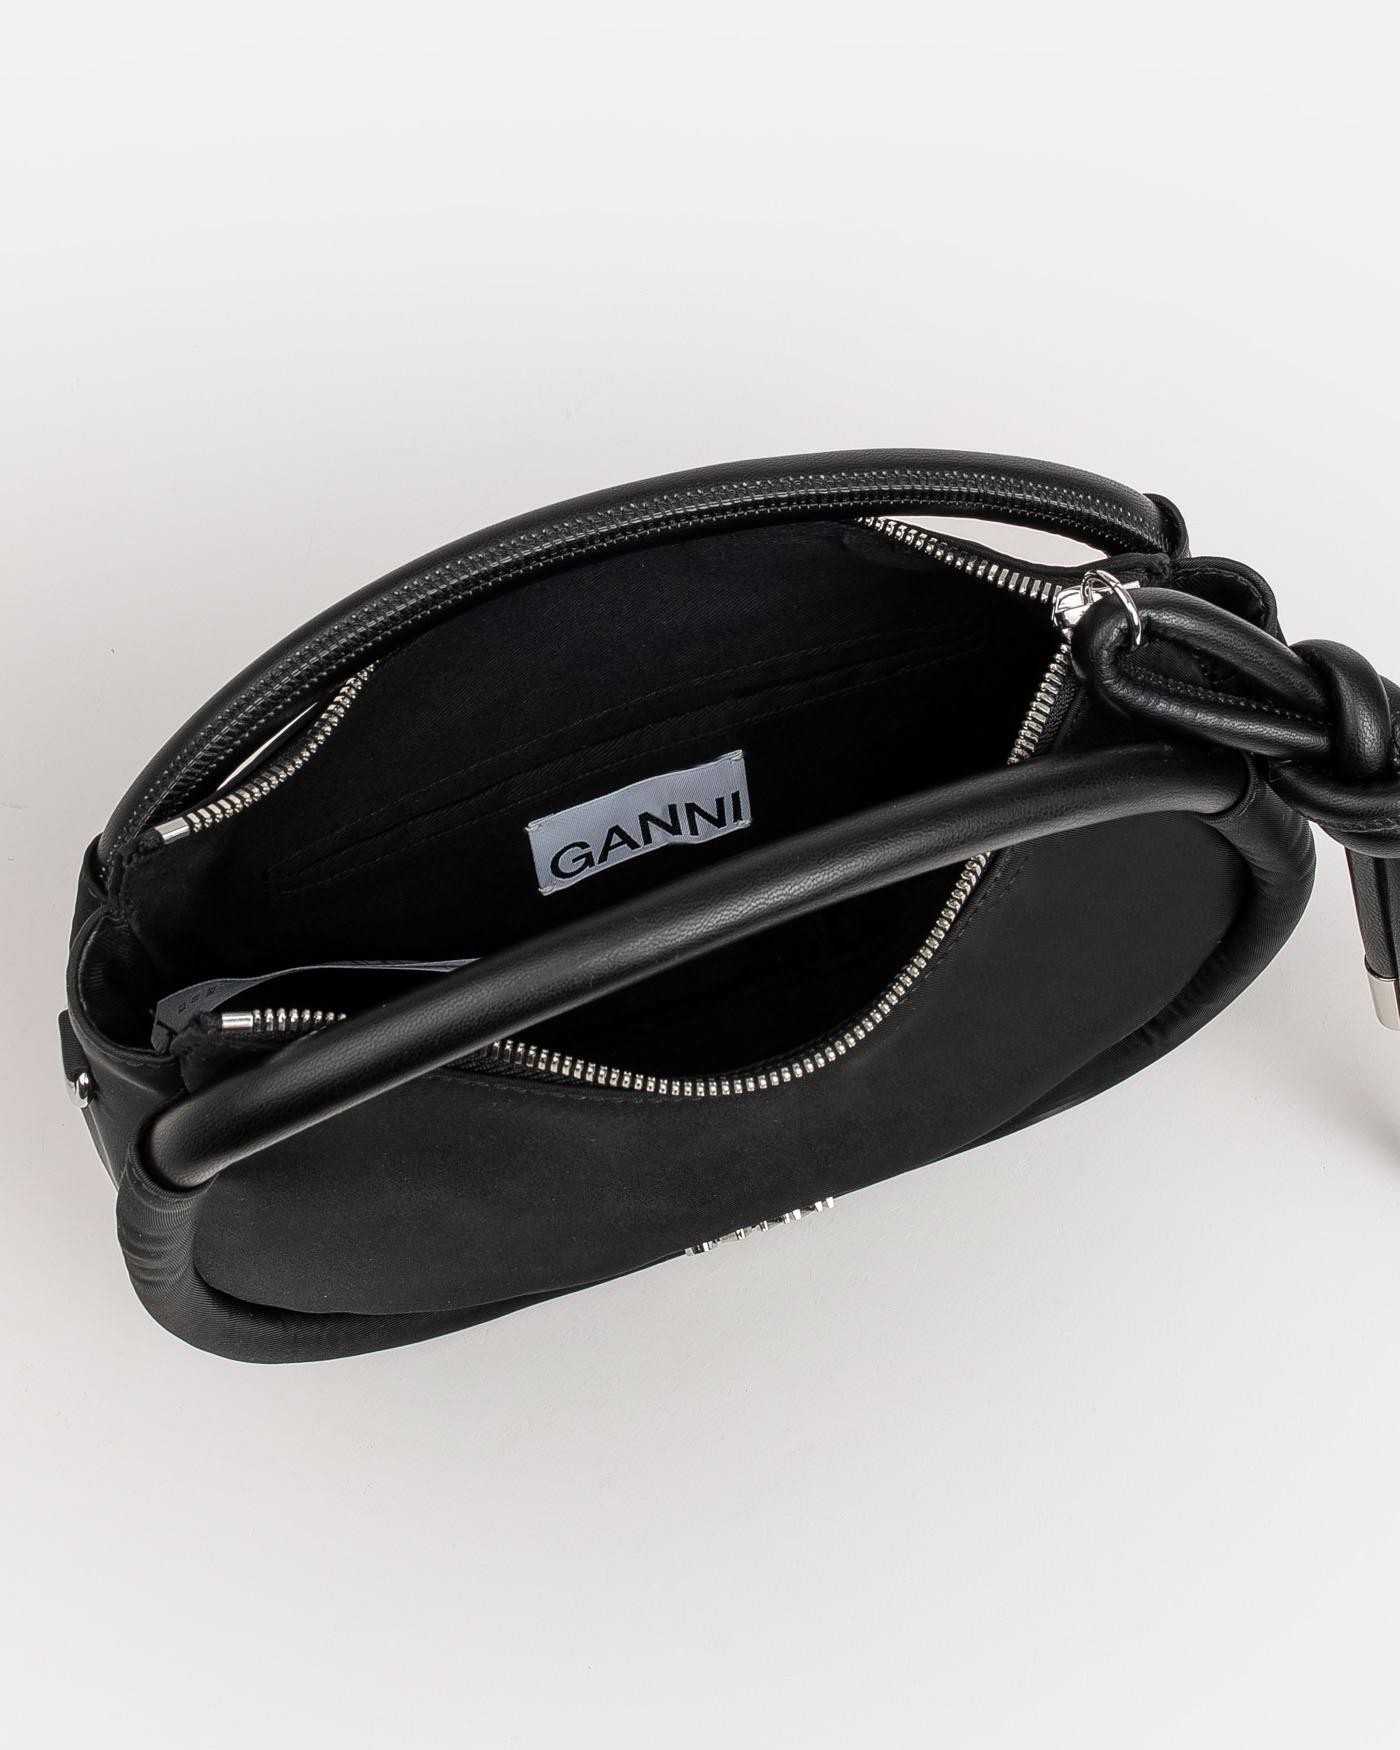 ganni-bolso-knot-mini-bag-black-negro-6